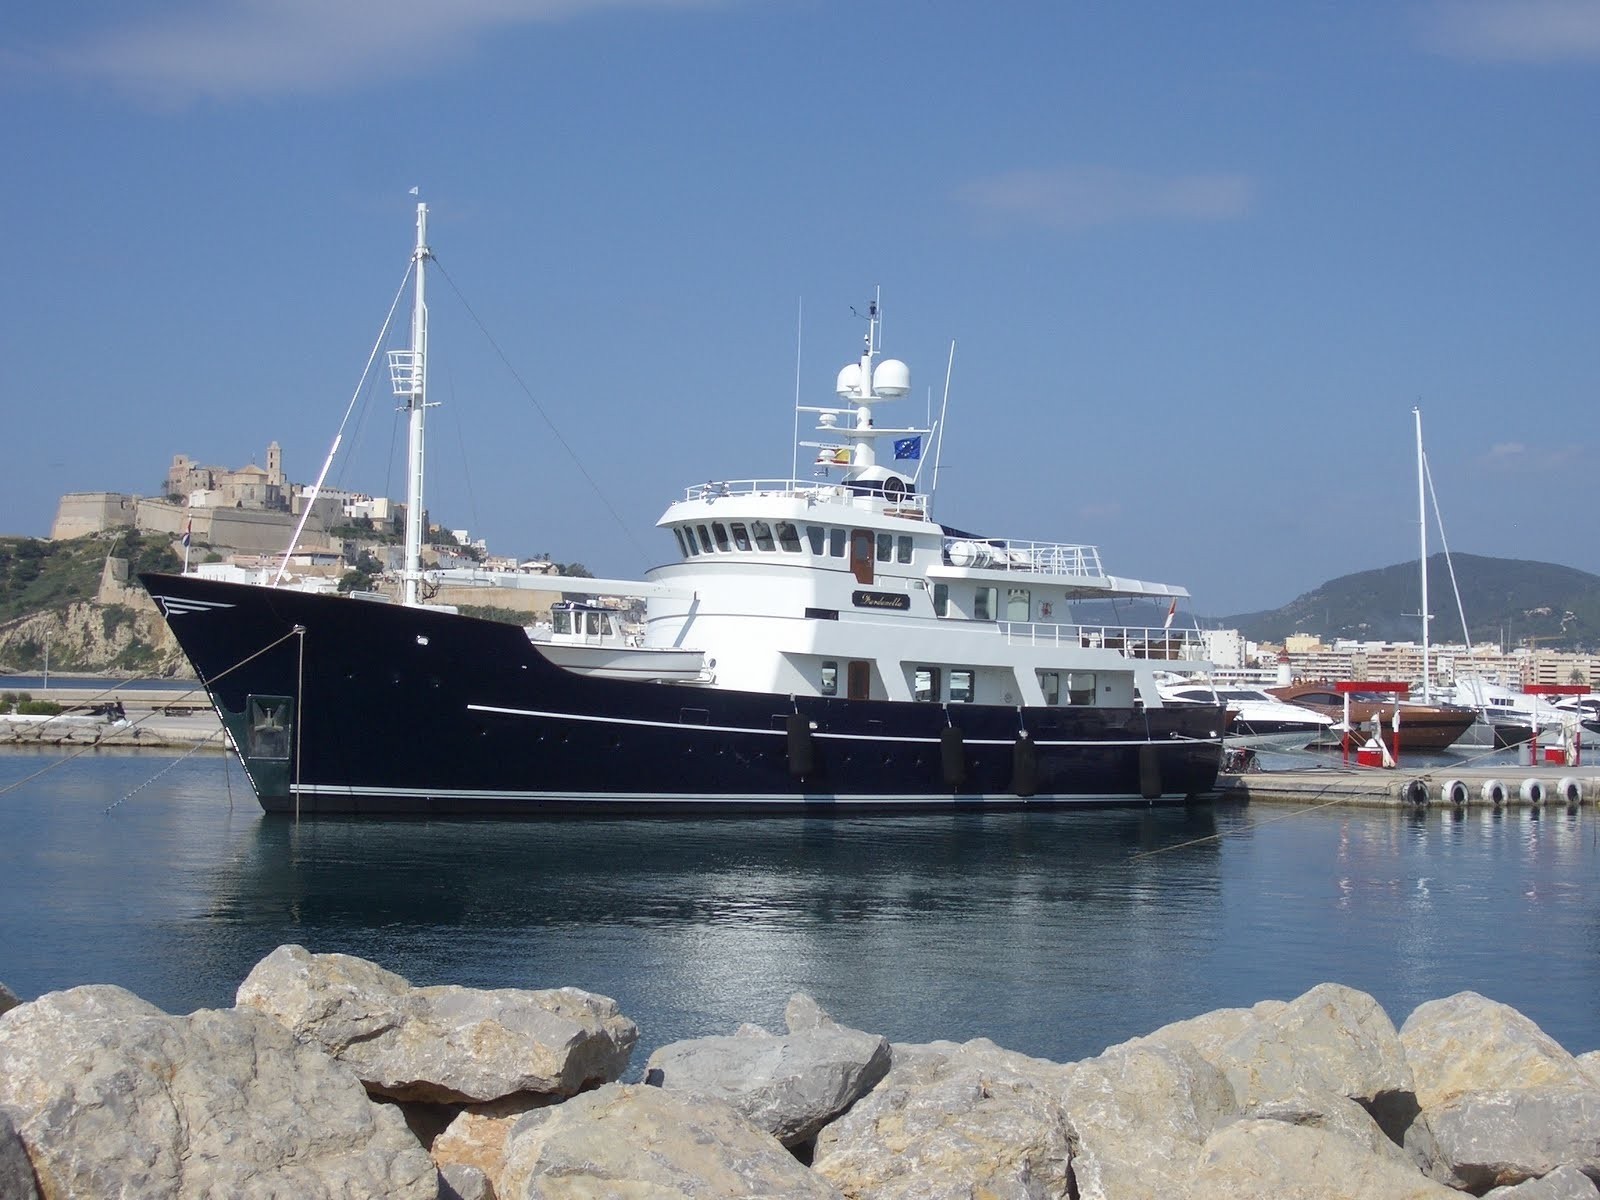 dardanella yacht owner